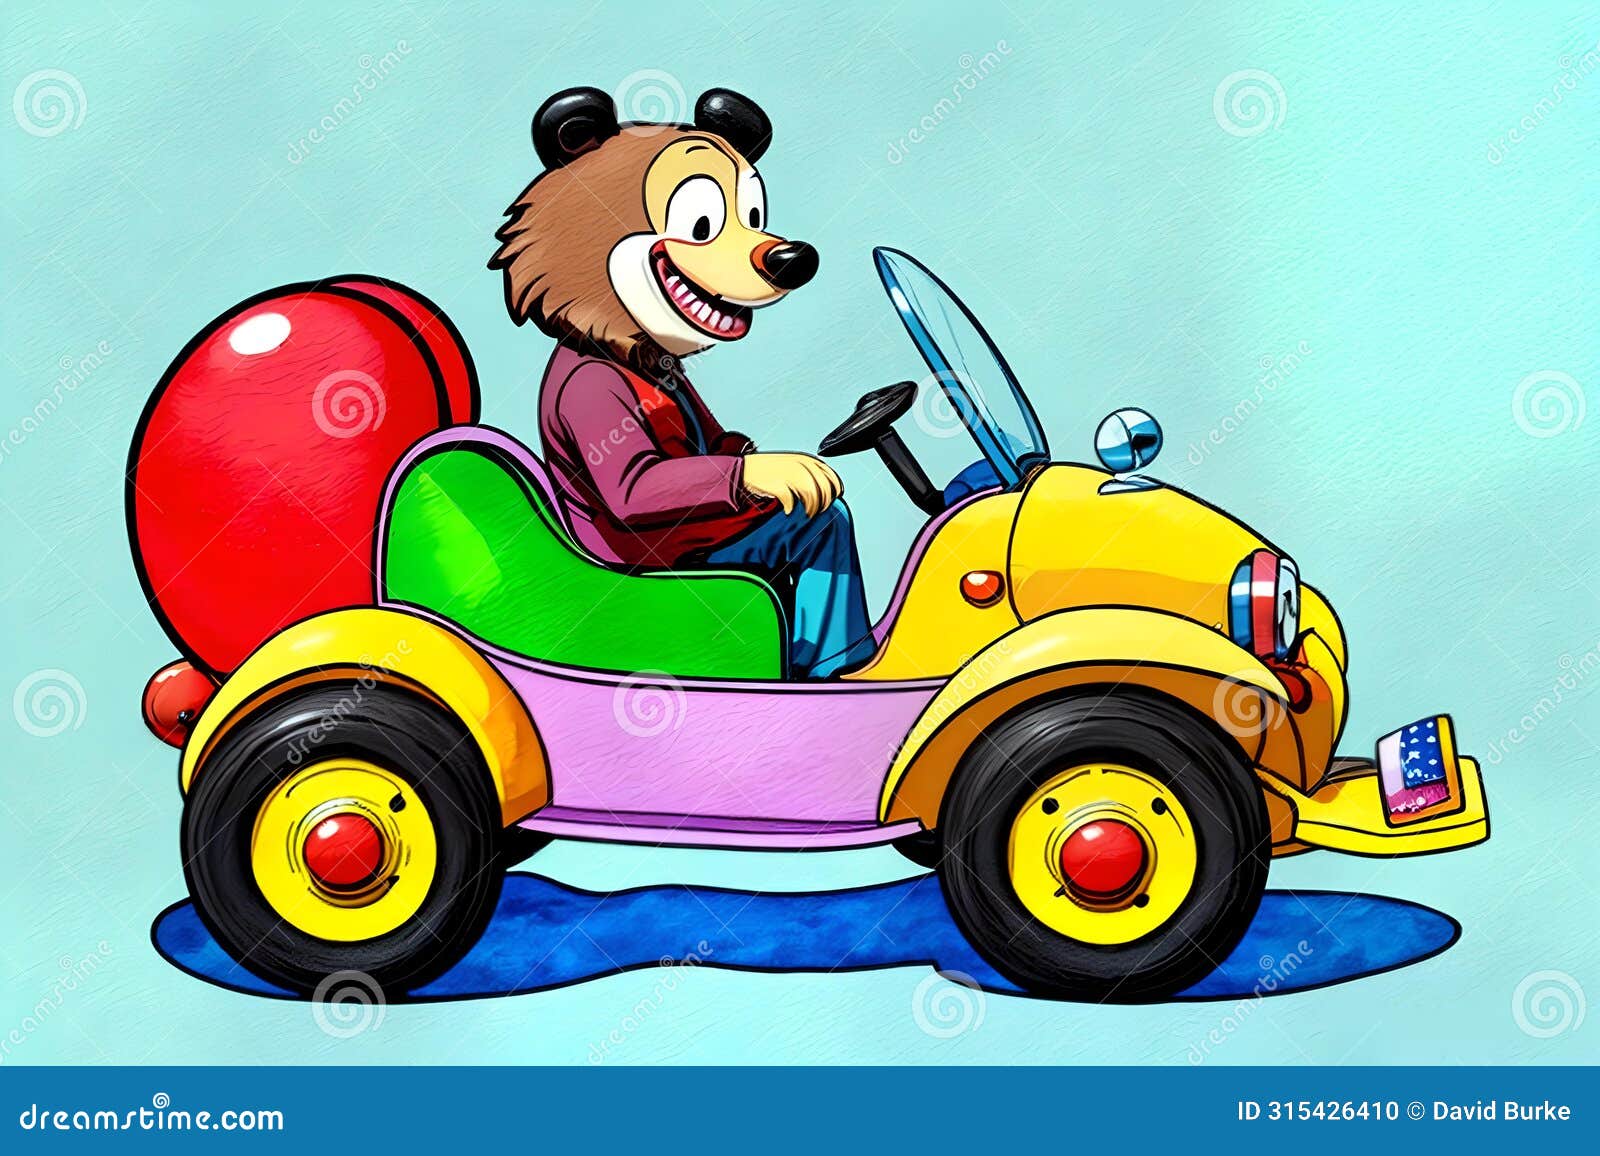 cartoon comic smile golf cart putt car caddy driver drawing